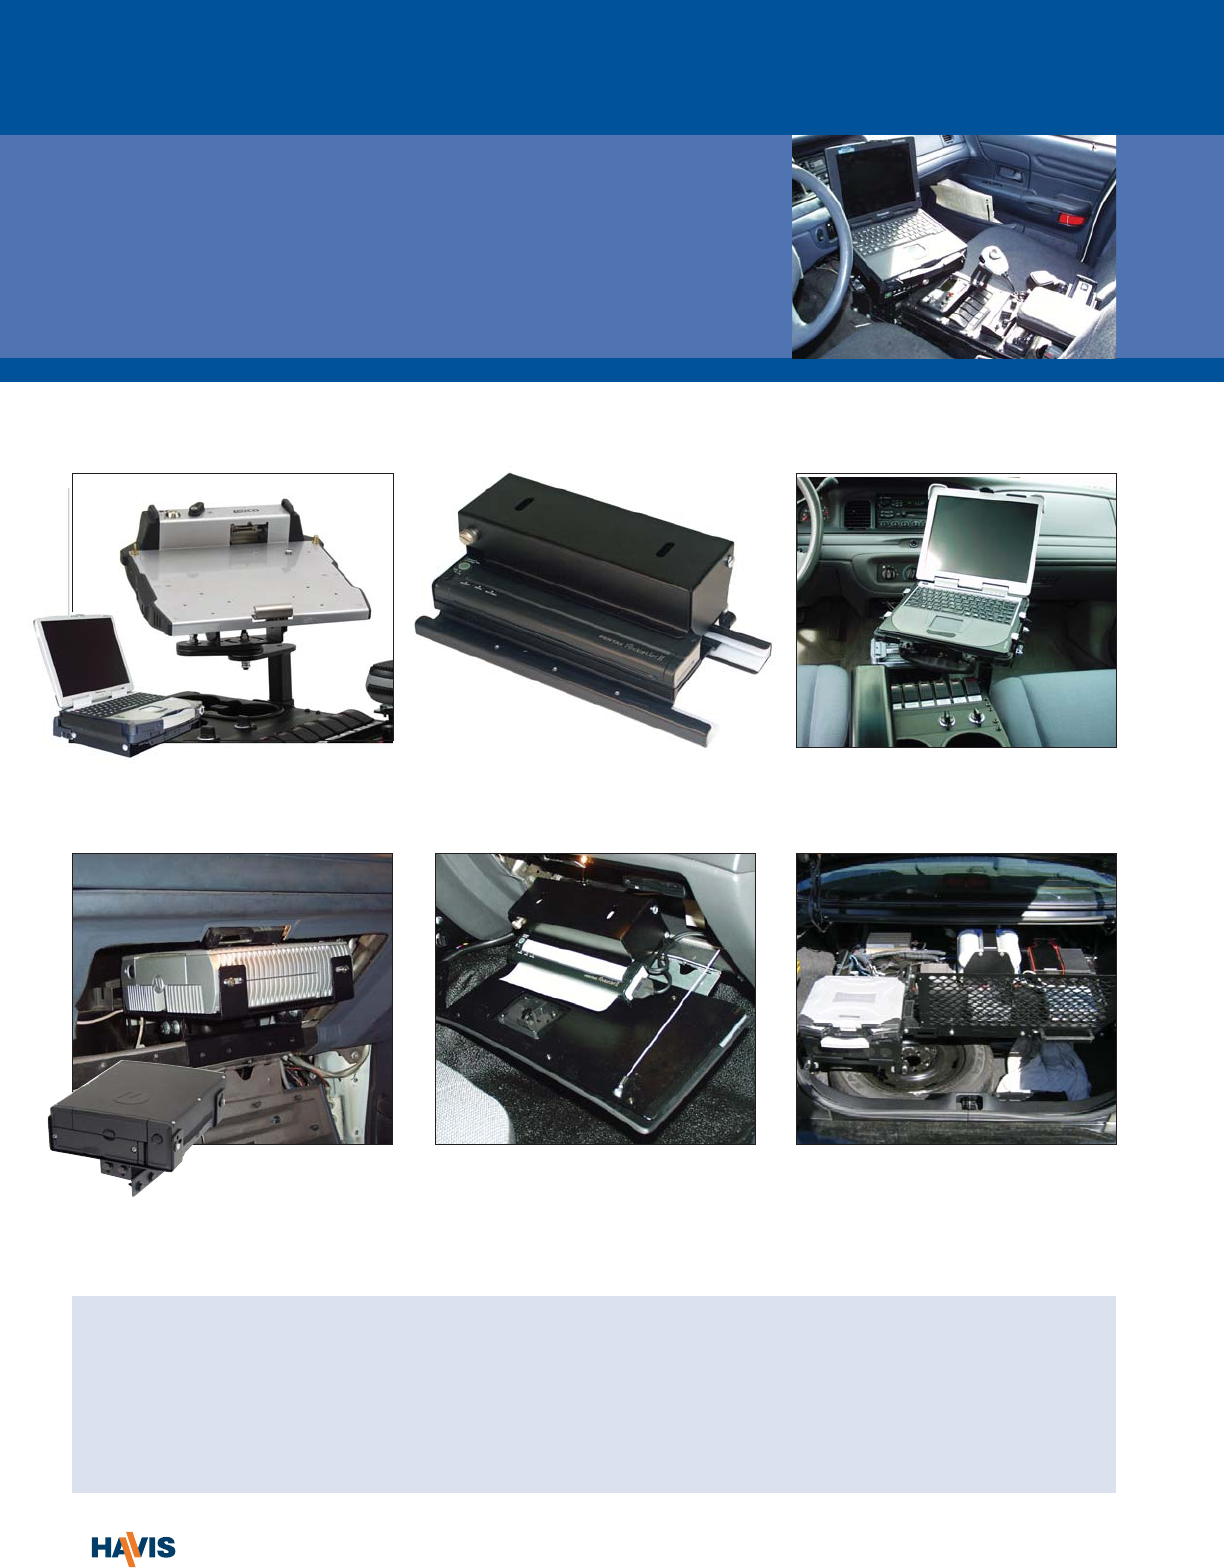 Havis Pentax Printer Glove Box Mount C-3610-CV Brand New 